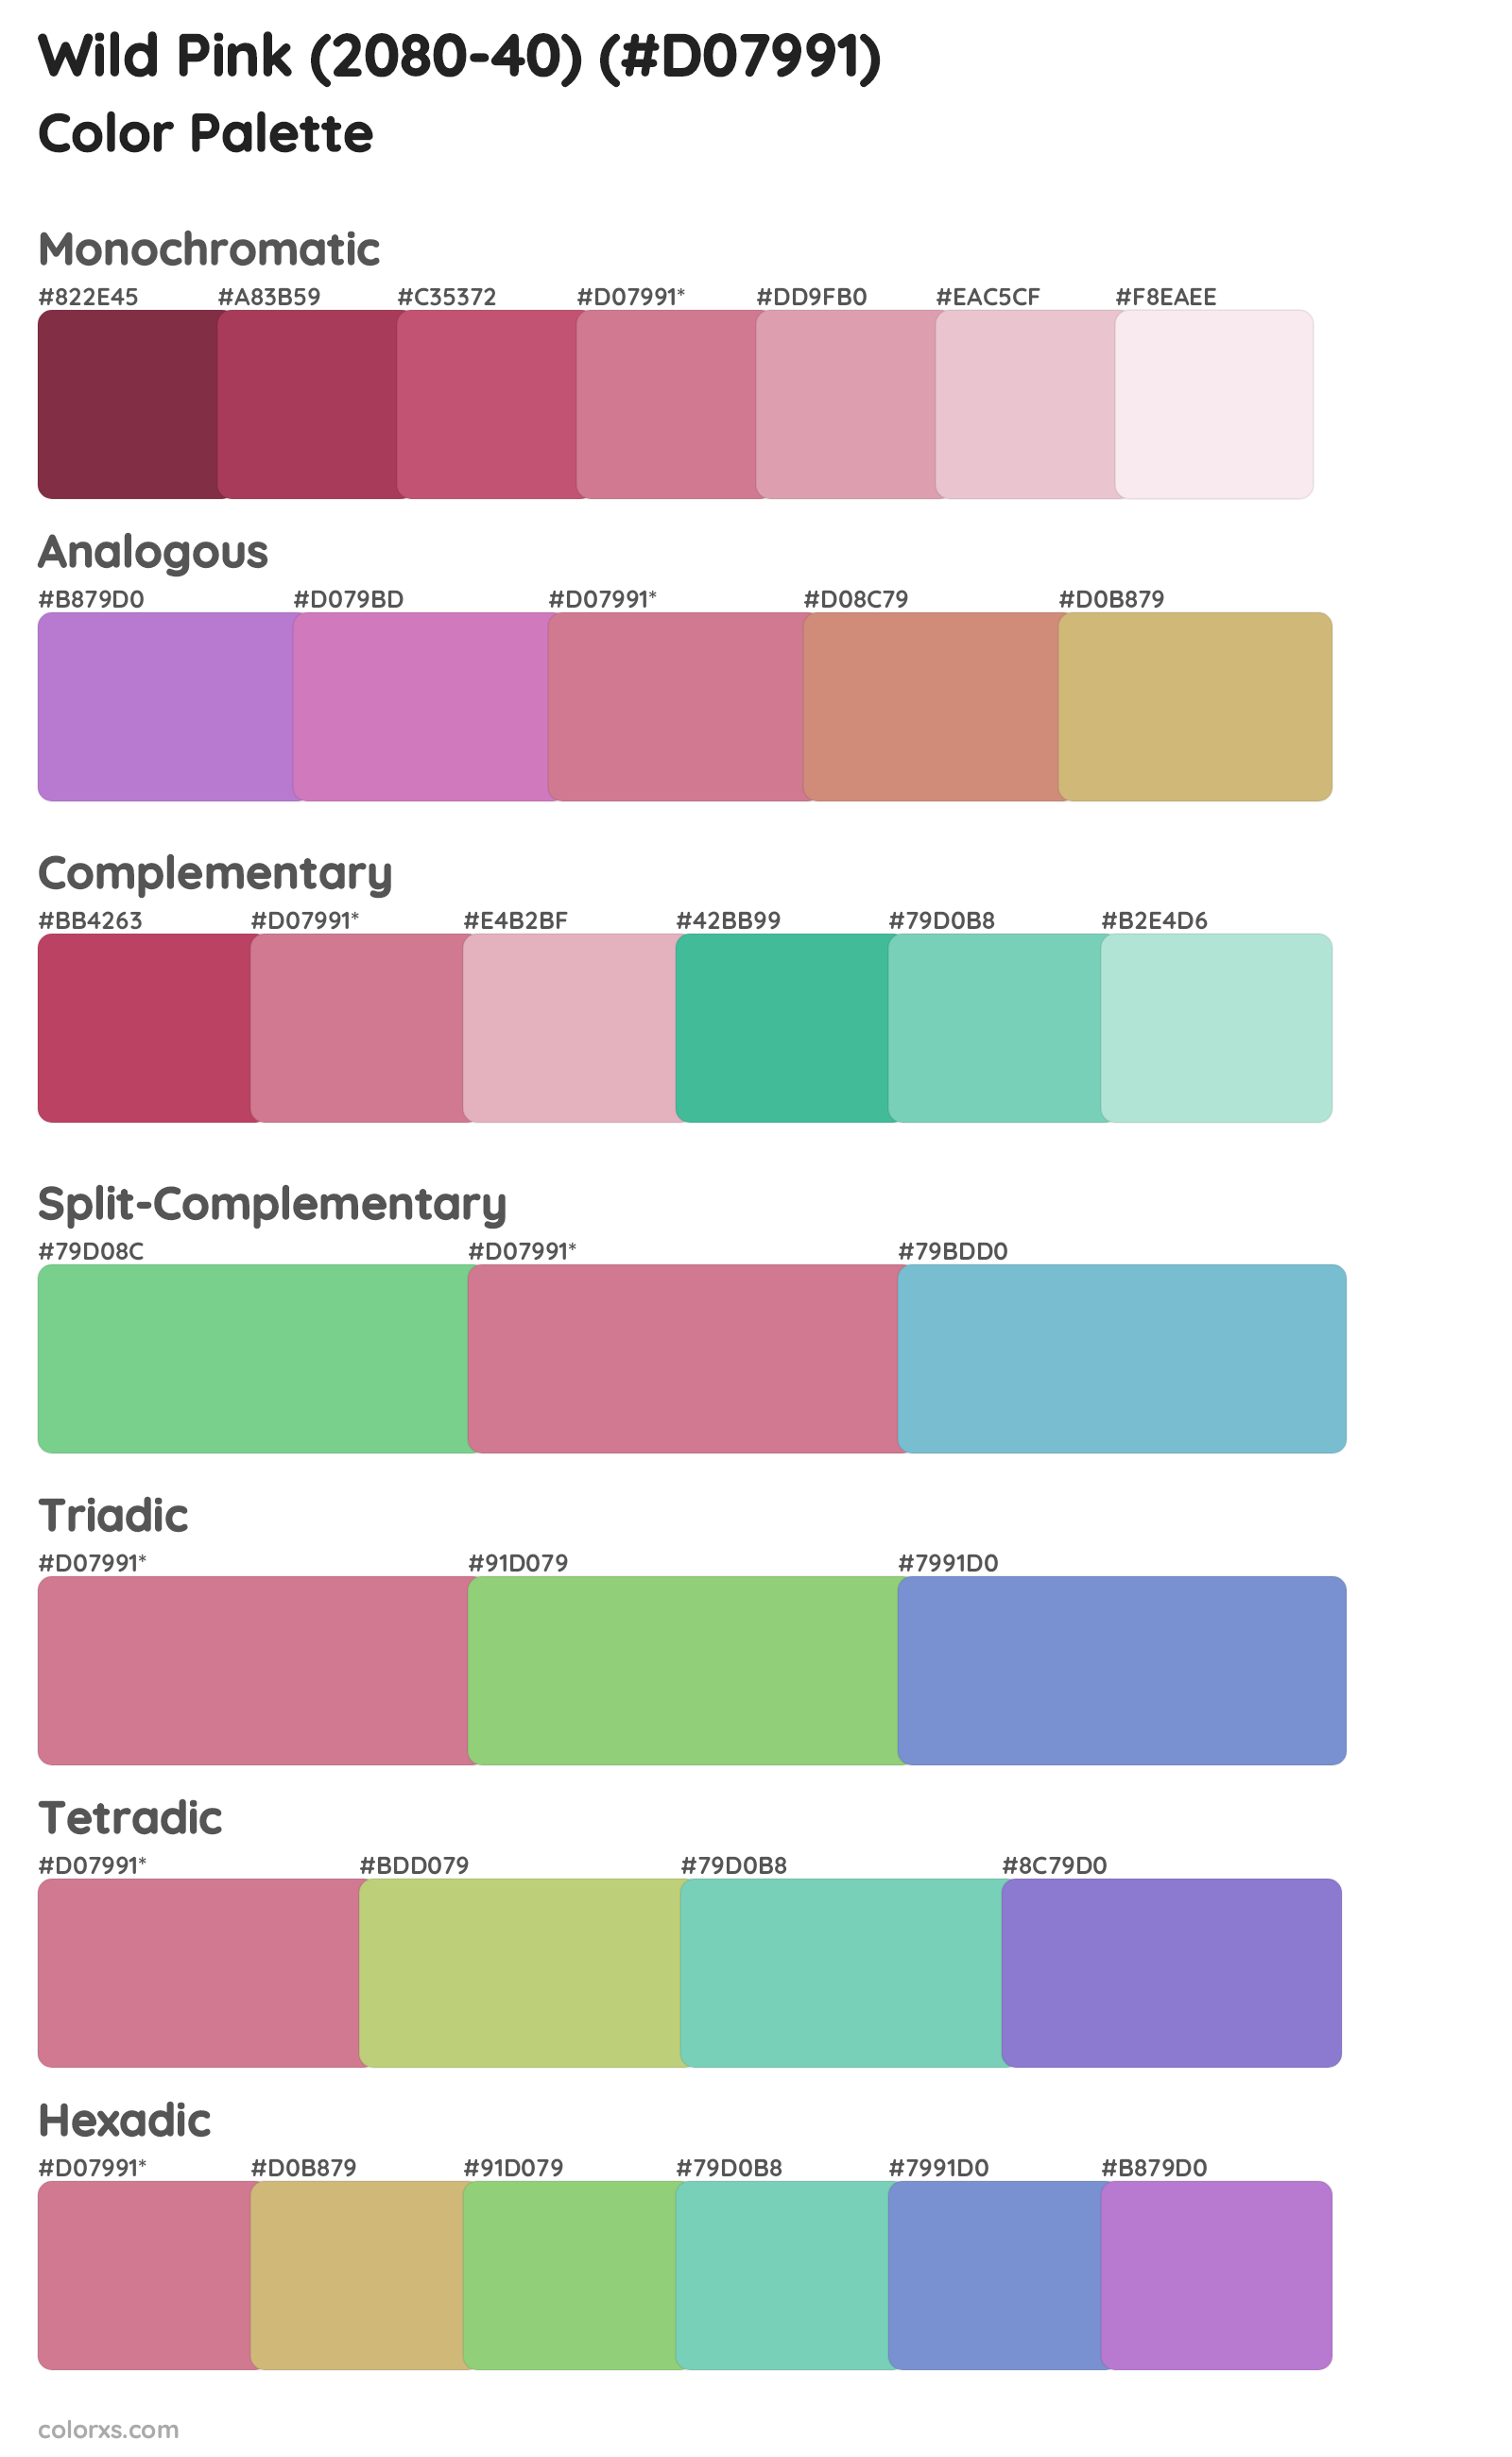 Wild Pink (2080-40) Color Scheme Palettes